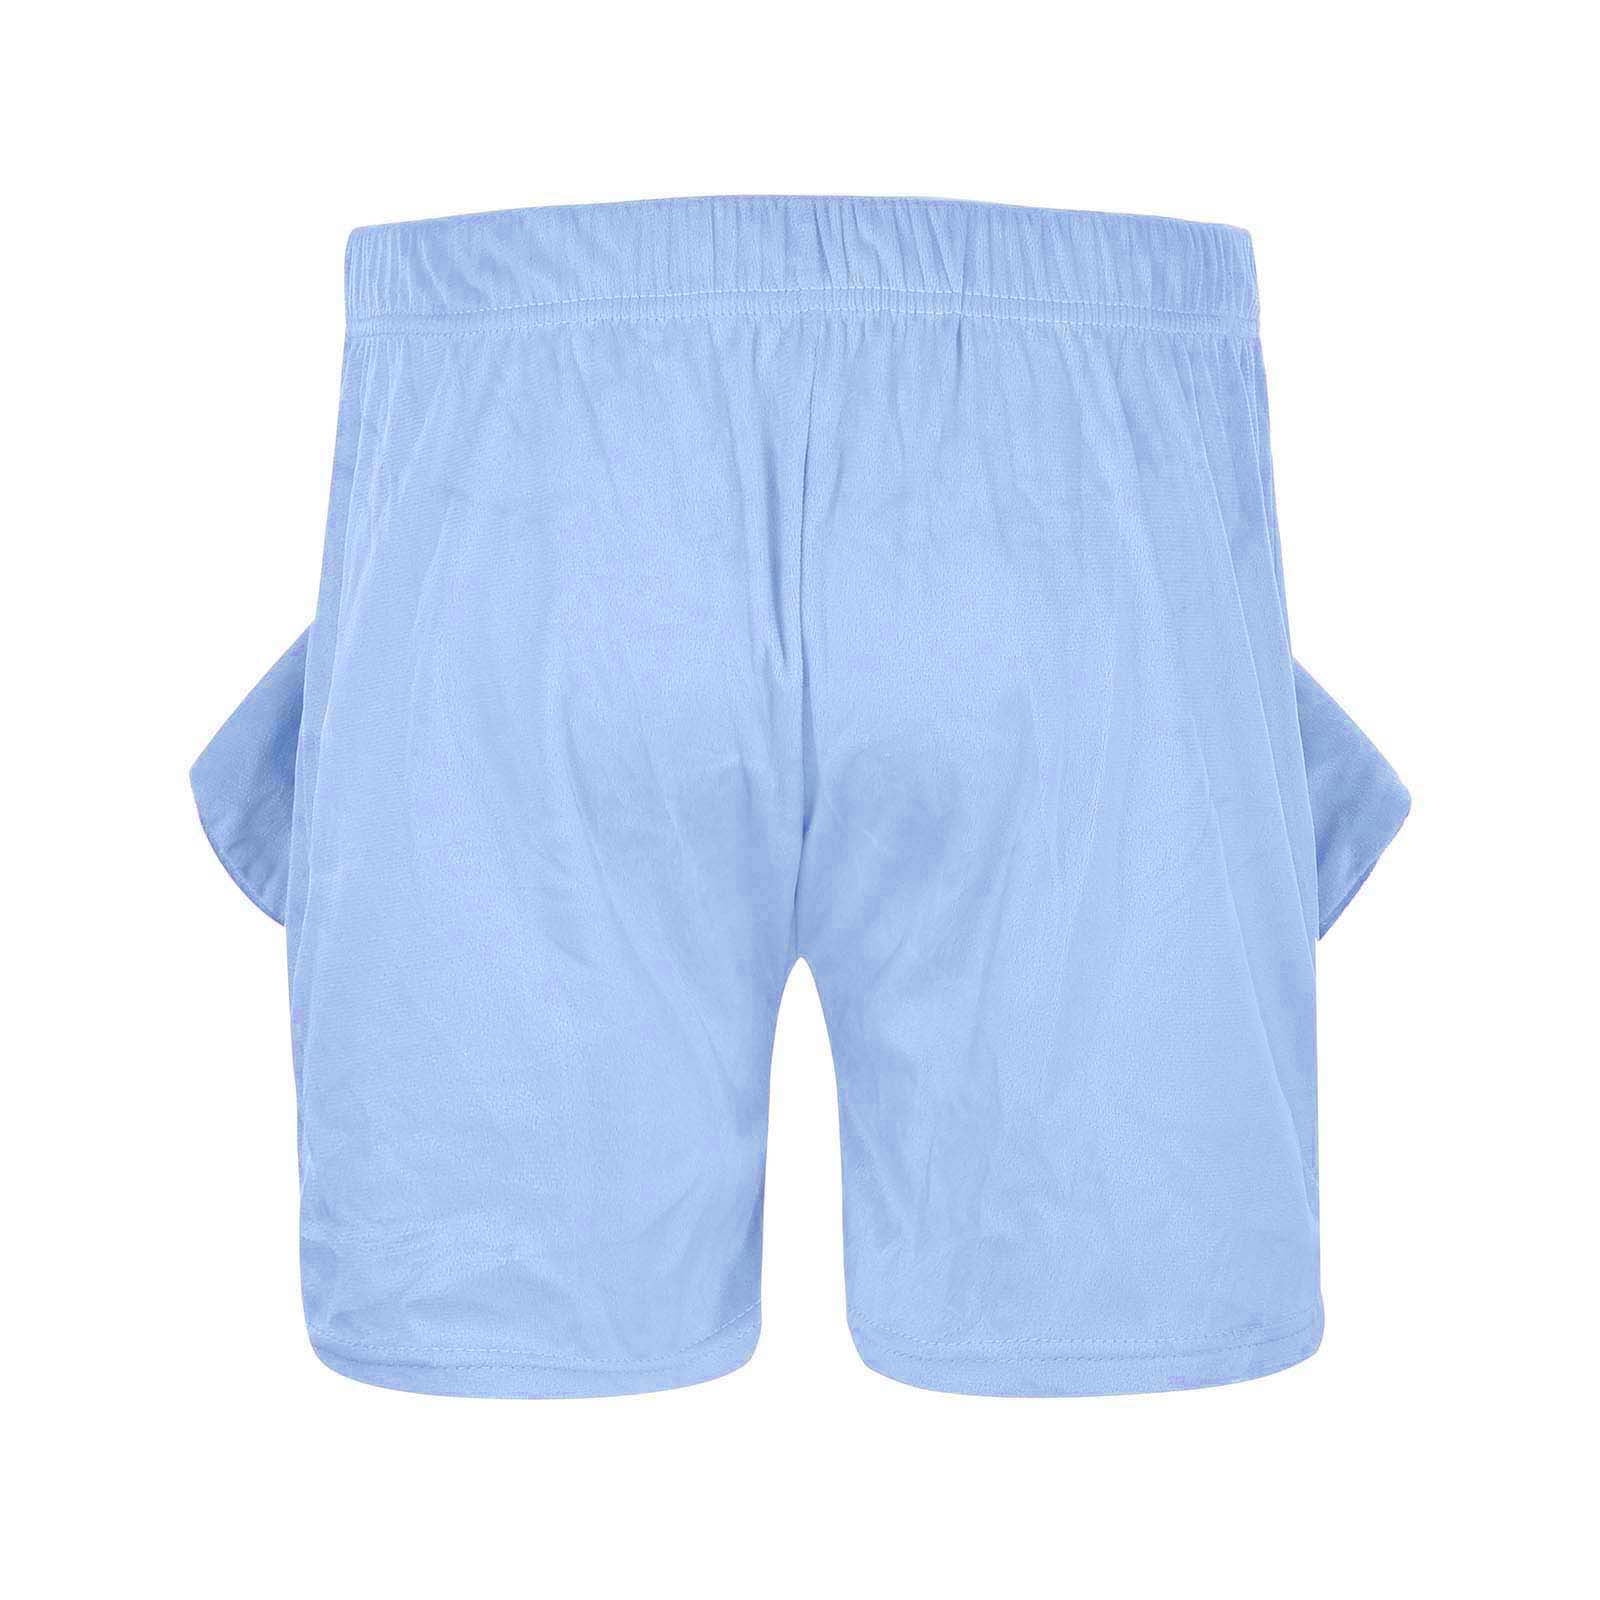 Vintage Elephant Underwear African Print Art Sublimation Boxer Shorts Hot  Man Panties Classic Boxer Brief Gift